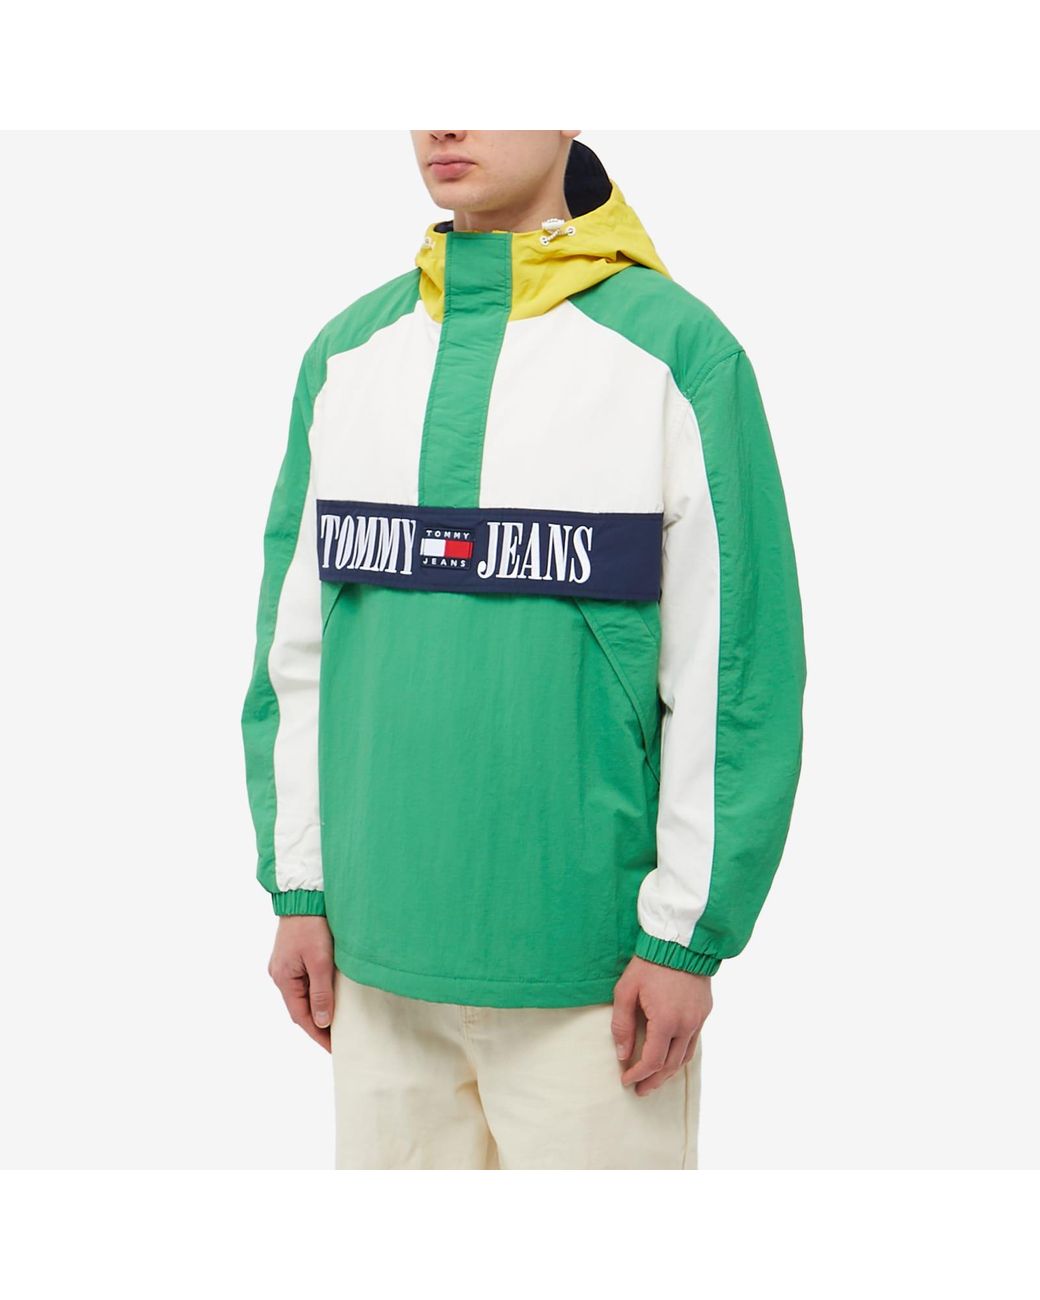 Tommy Hilfiger Chicago Archive Popover Jacket in Green for Men